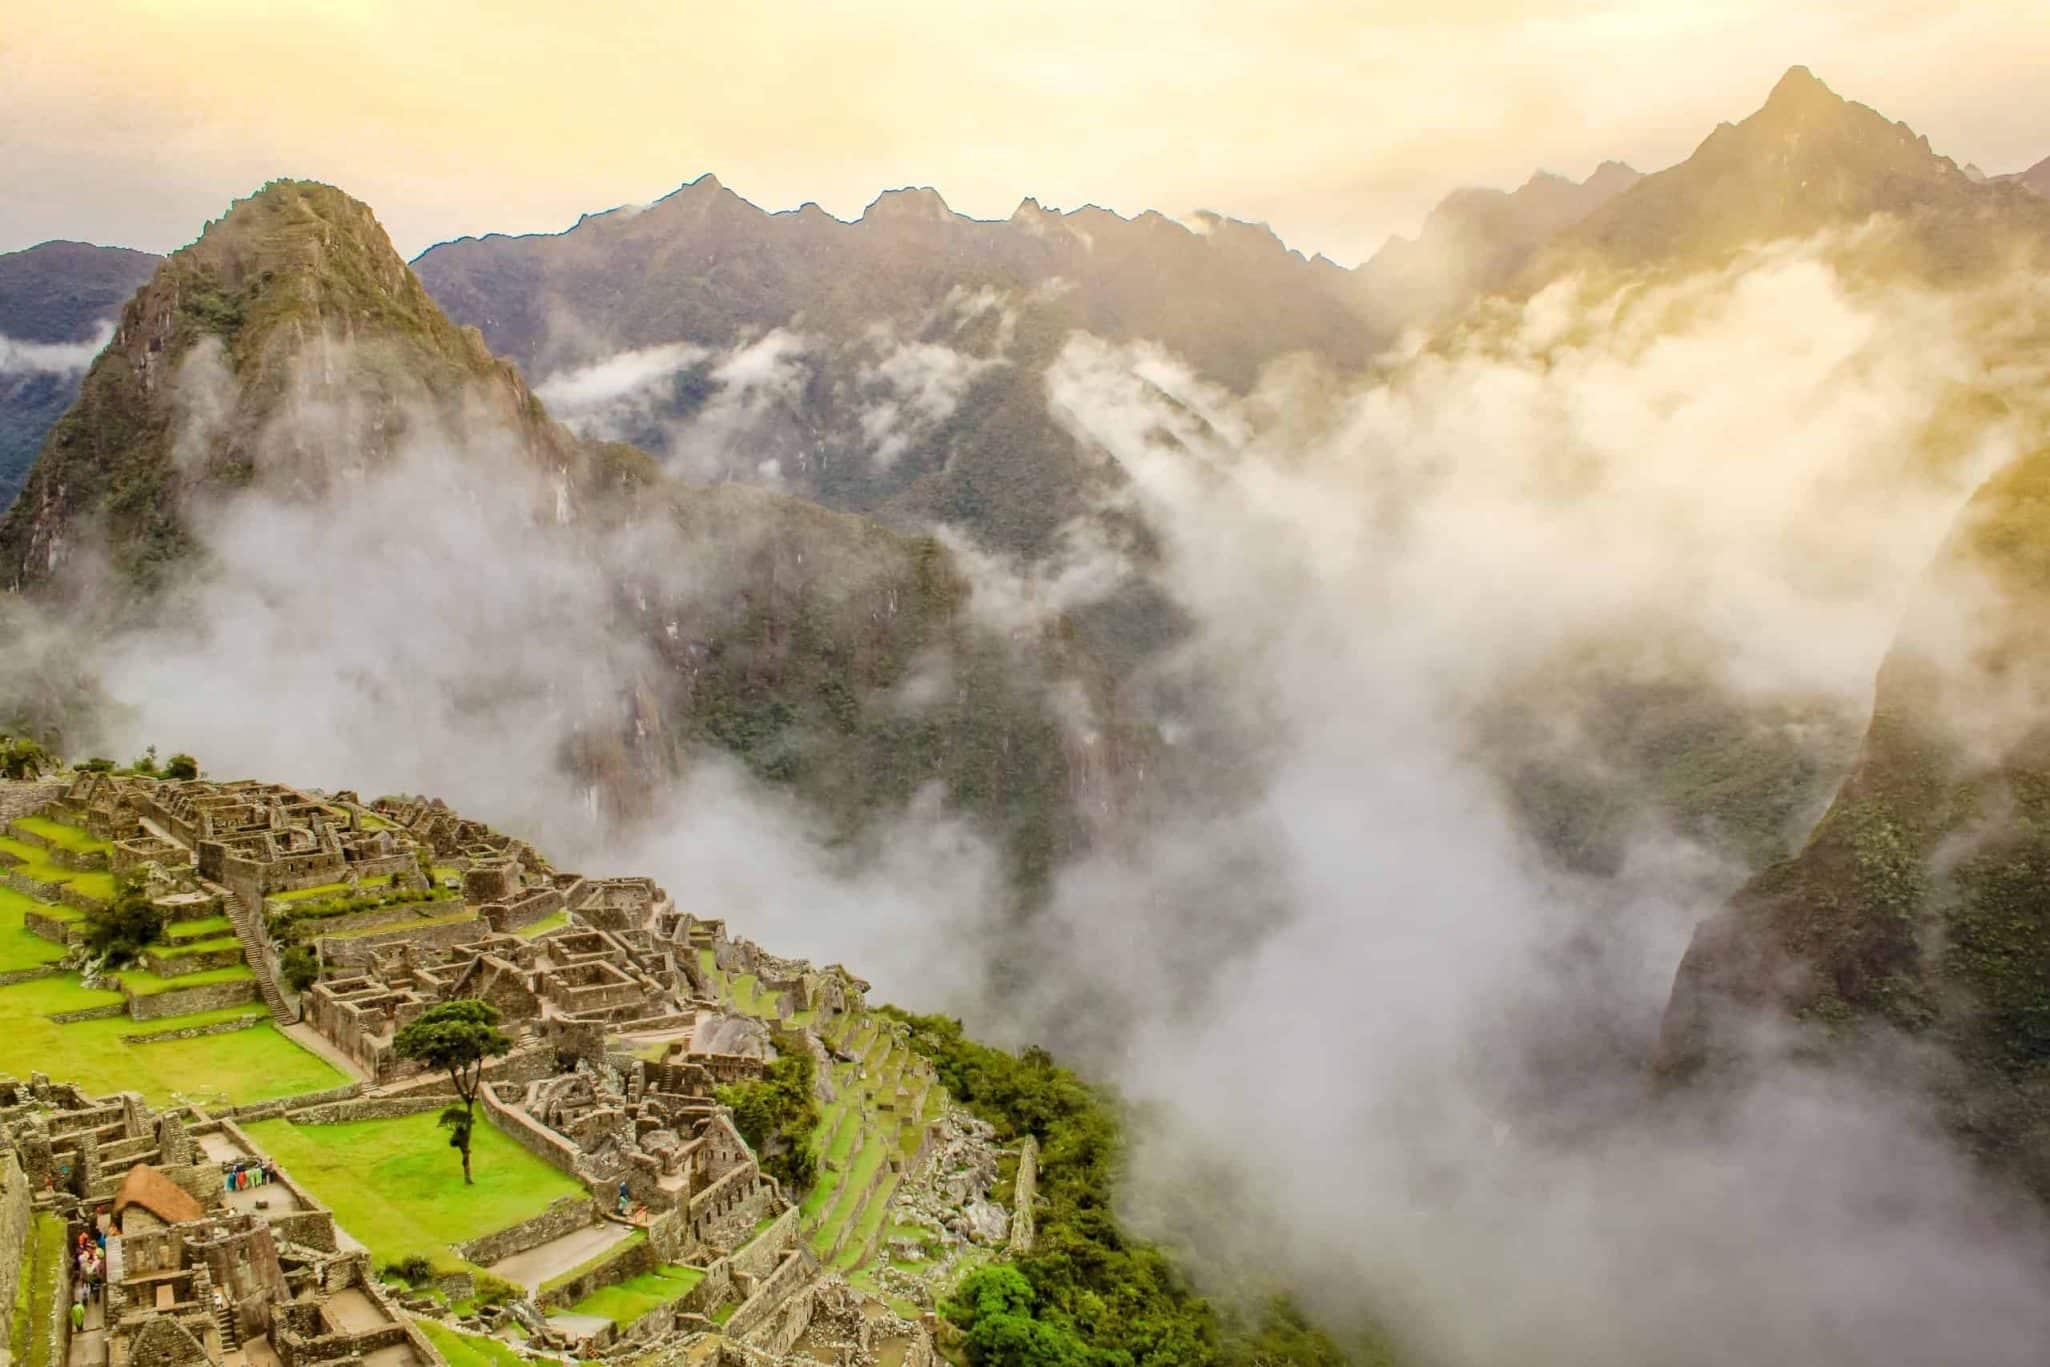 Machu Picchu: Lost City of The Incas